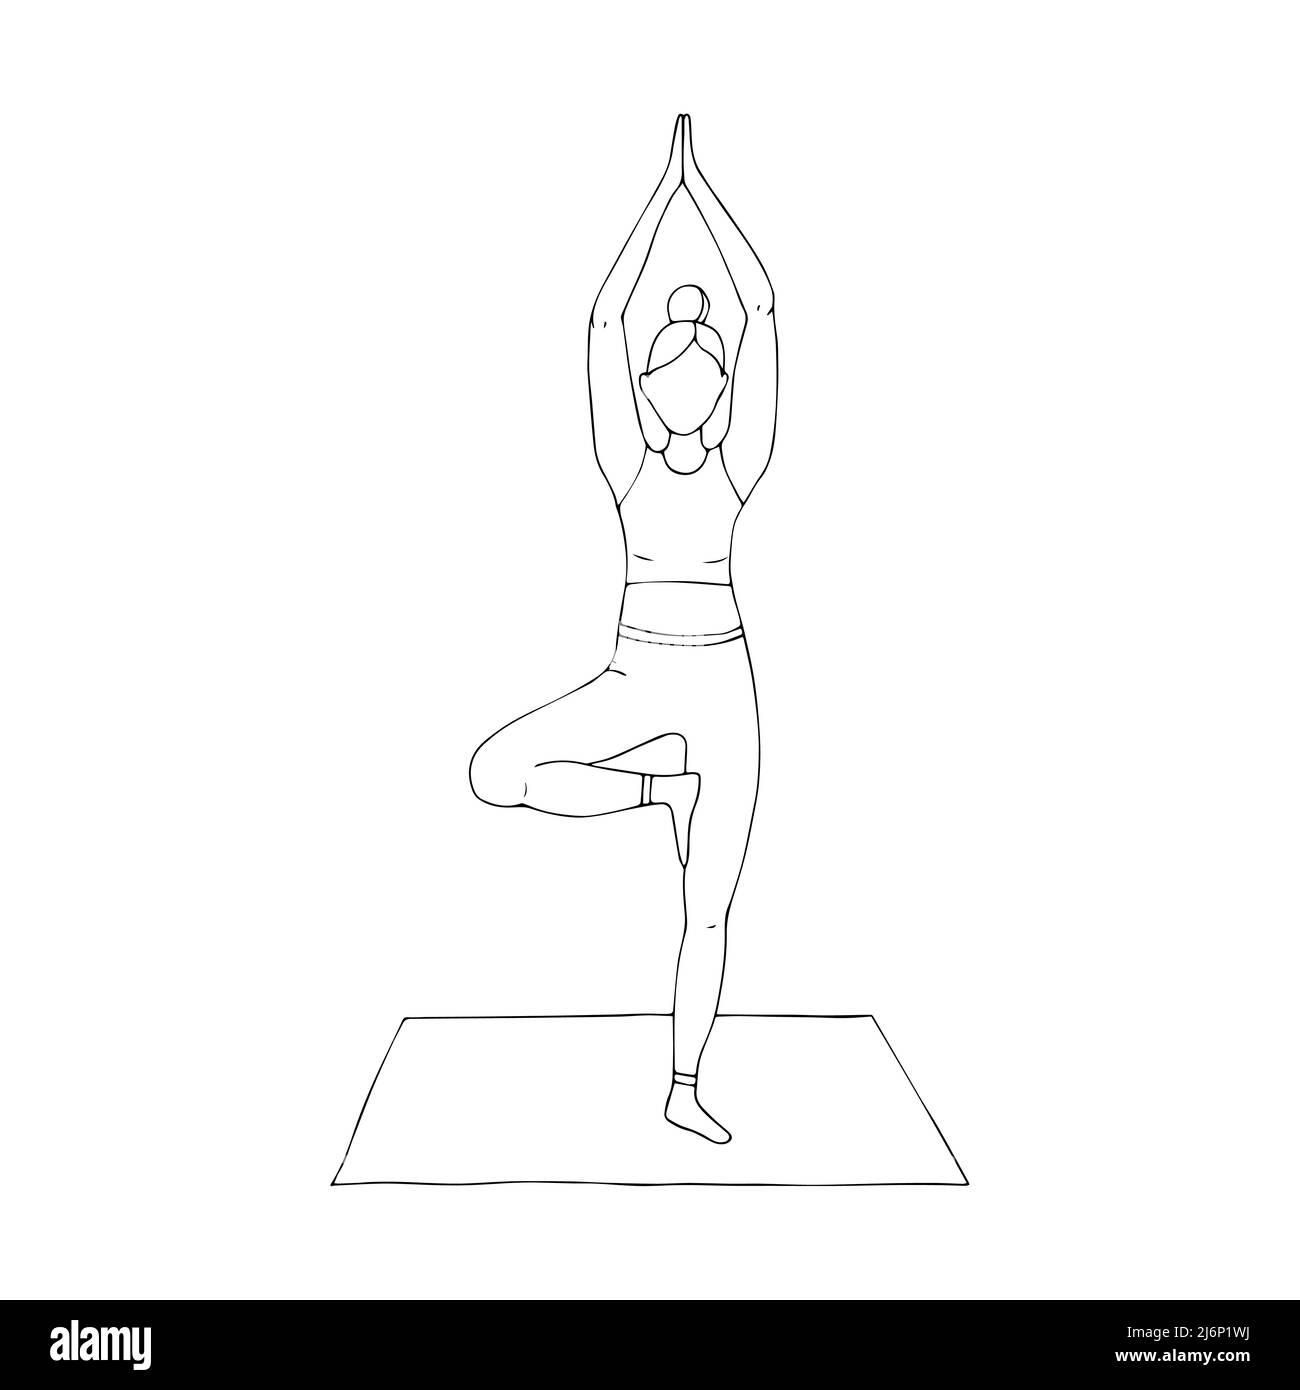 How to Do Half Moon Pose - Yoga Tutorial — Alo Moves